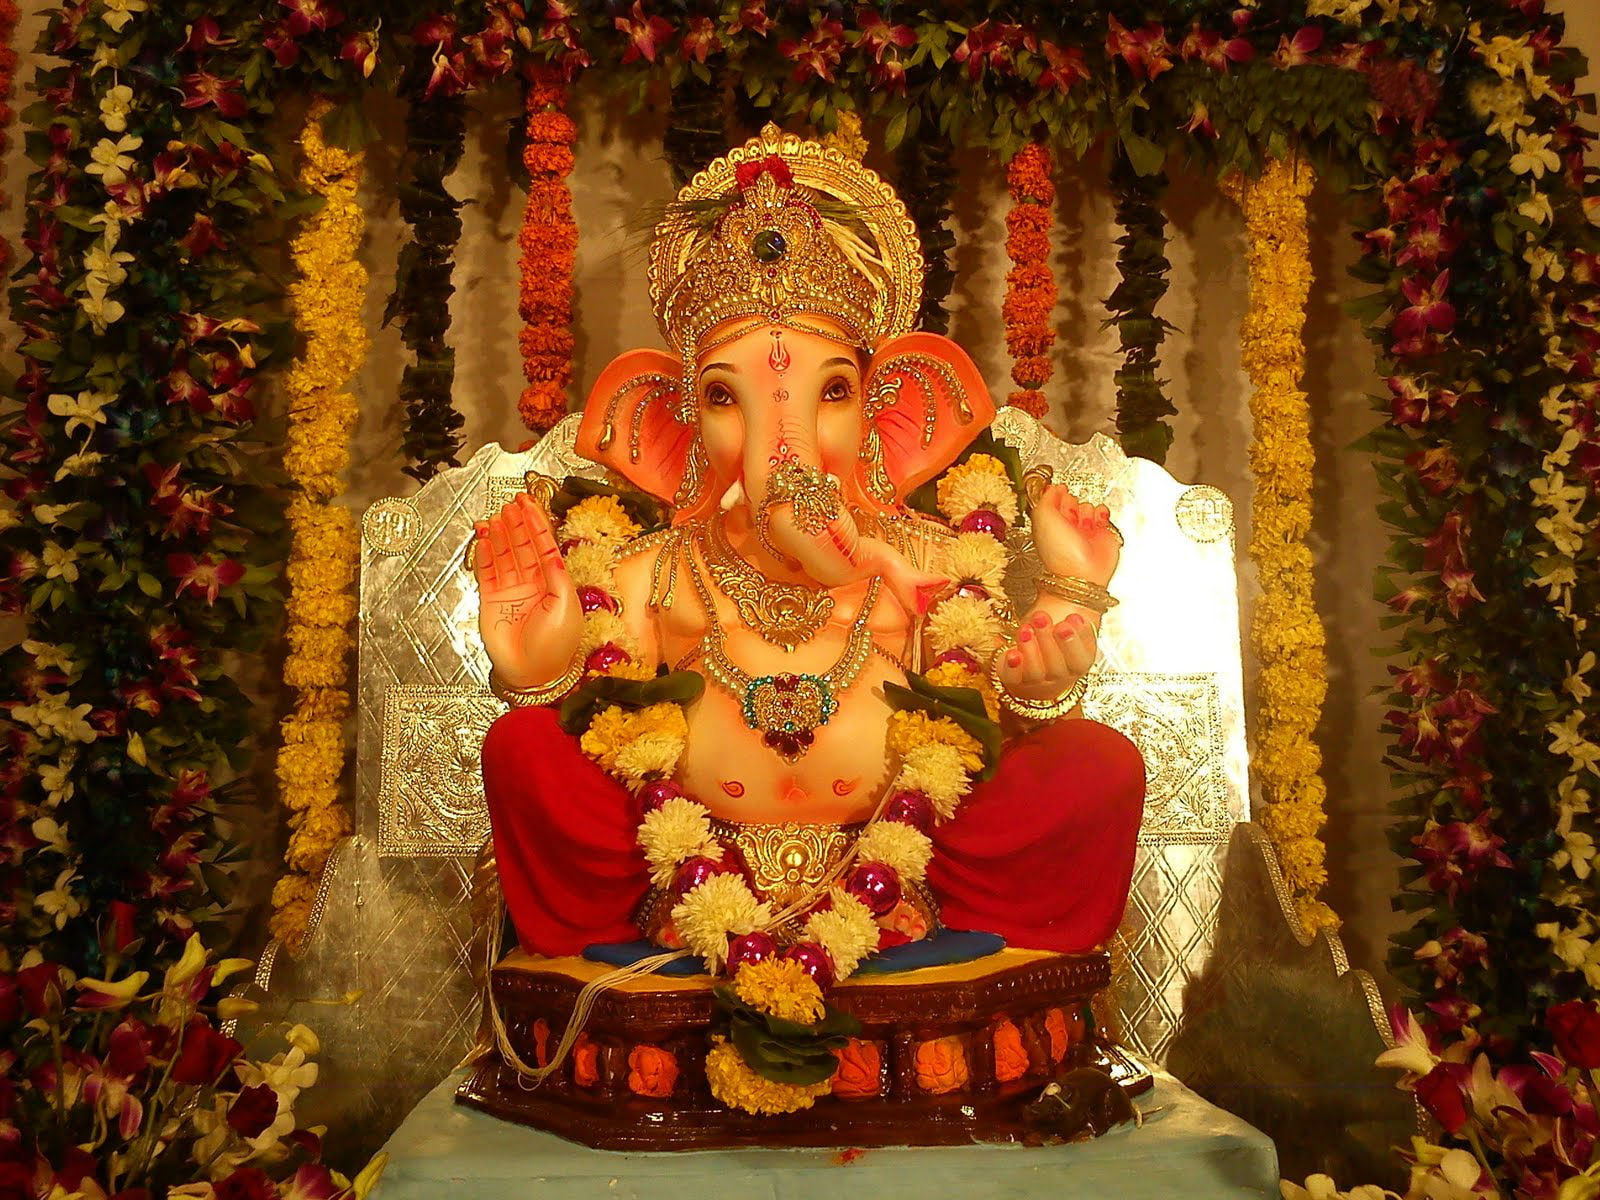 Lalbaugcha Raja Ganpati, Lord Ganesha figurine, Festivals / Holidays